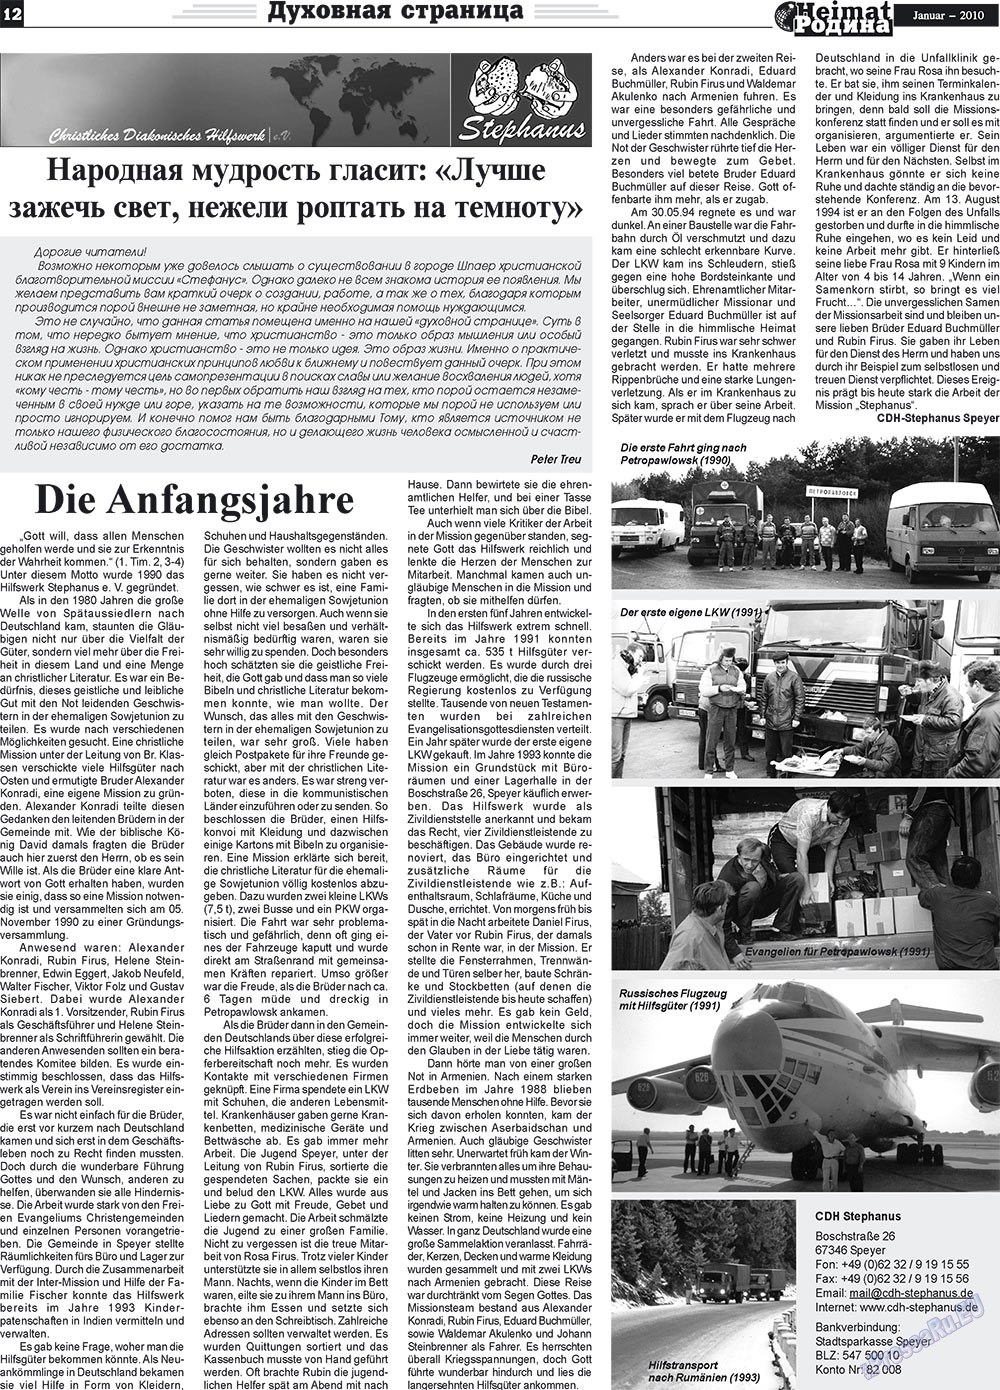 Heimat-Родина, газета. 2010 №1 стр.12